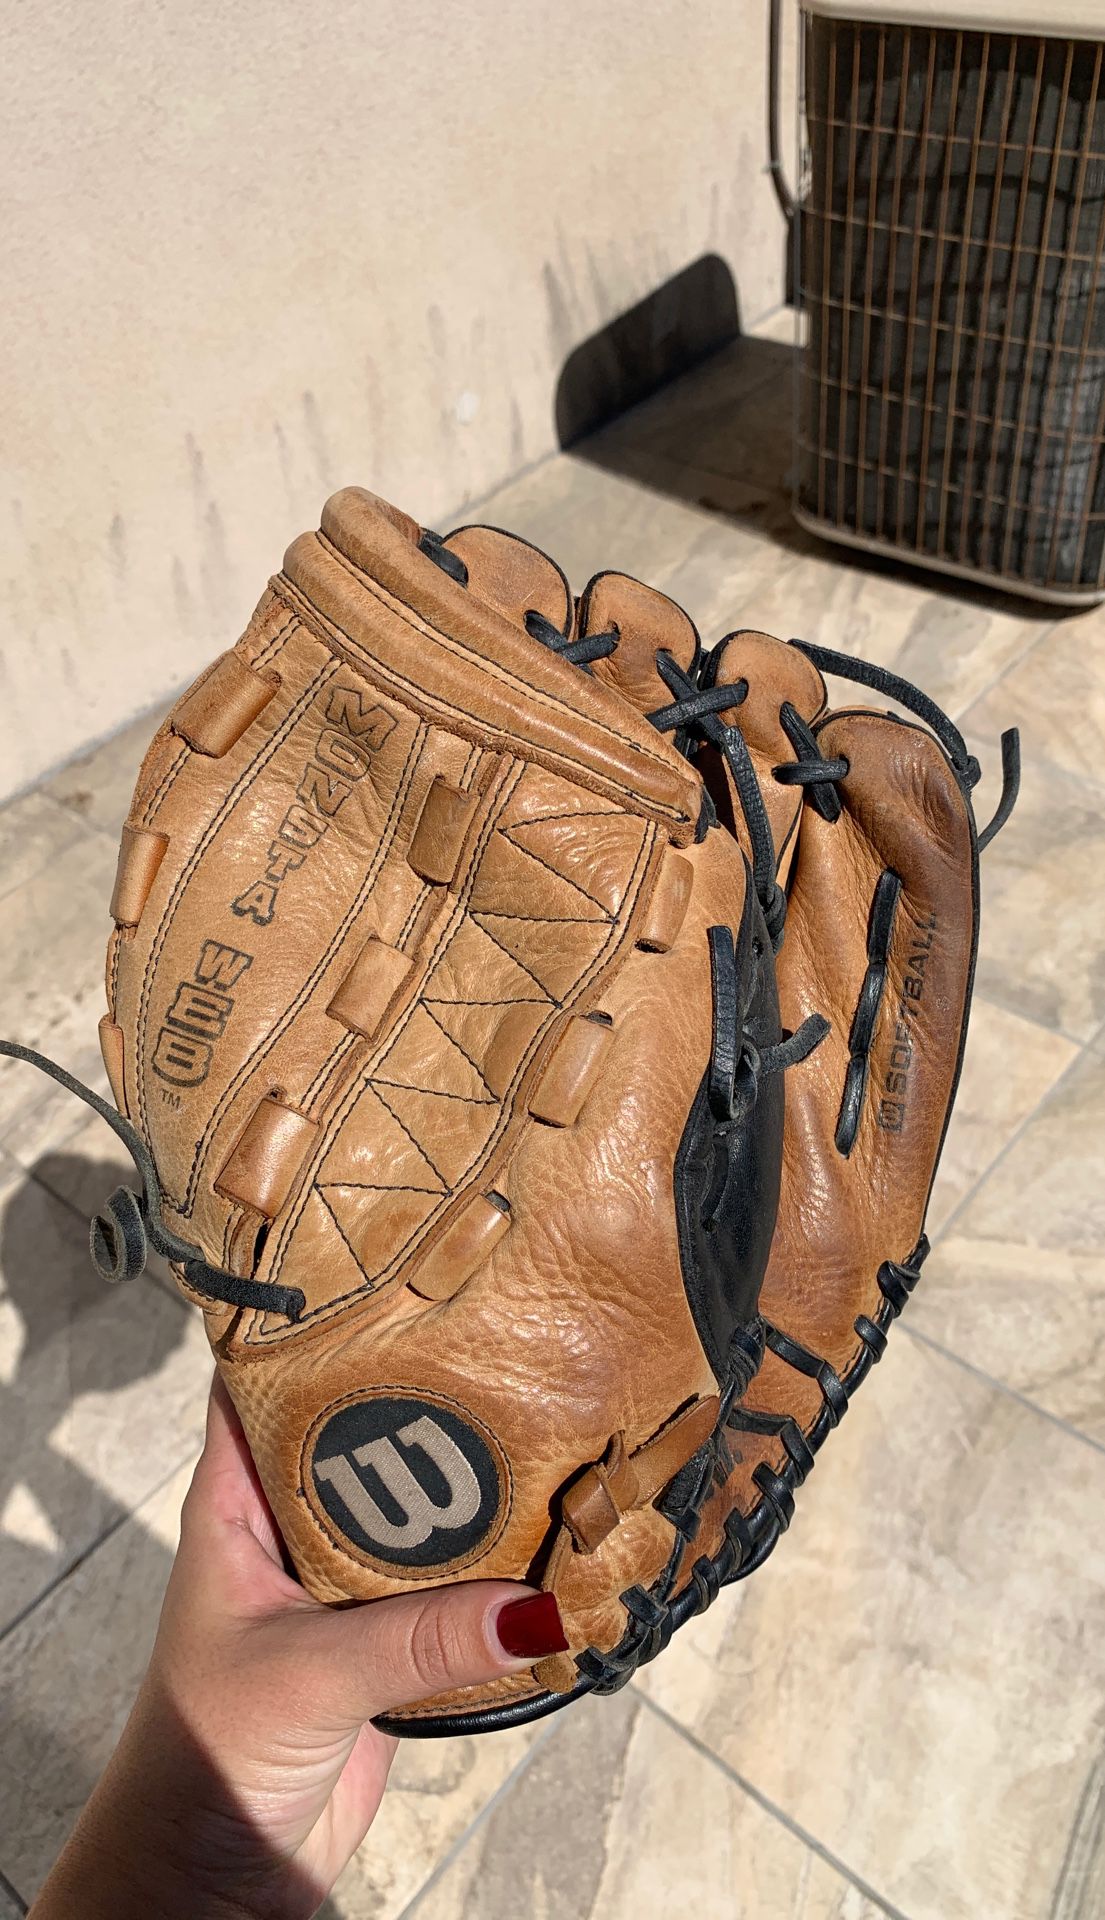 Wilson softball glove